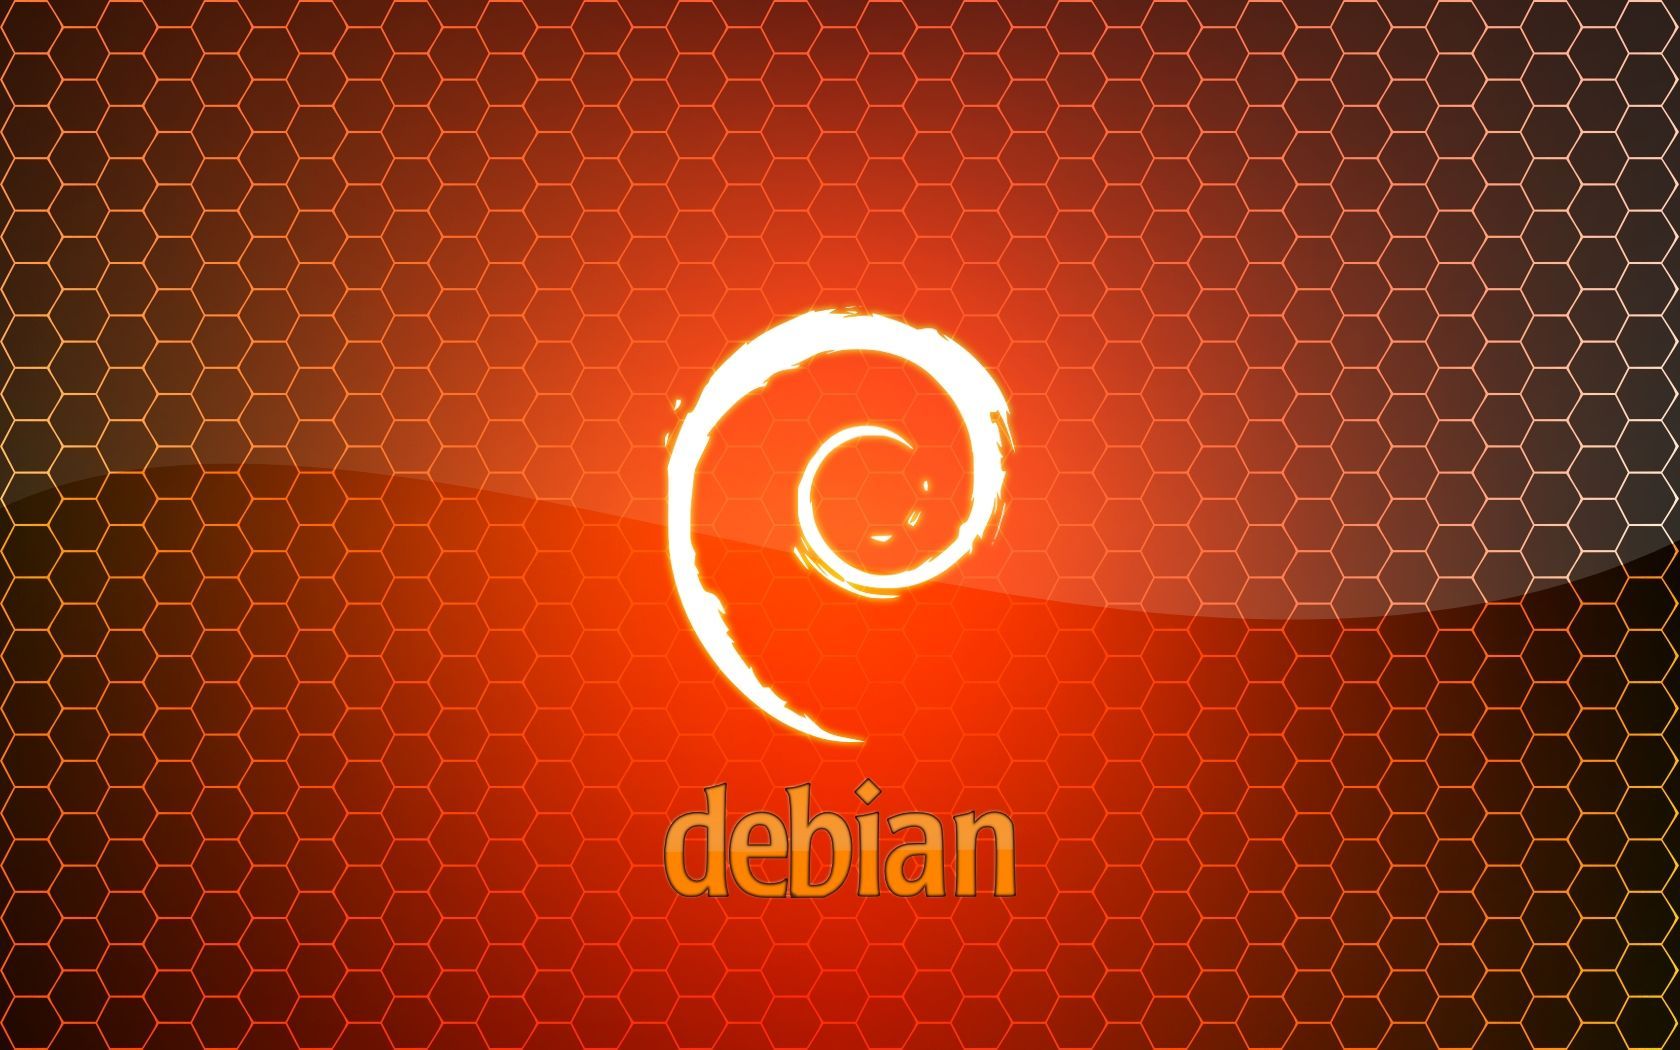 debian - DeviantArt